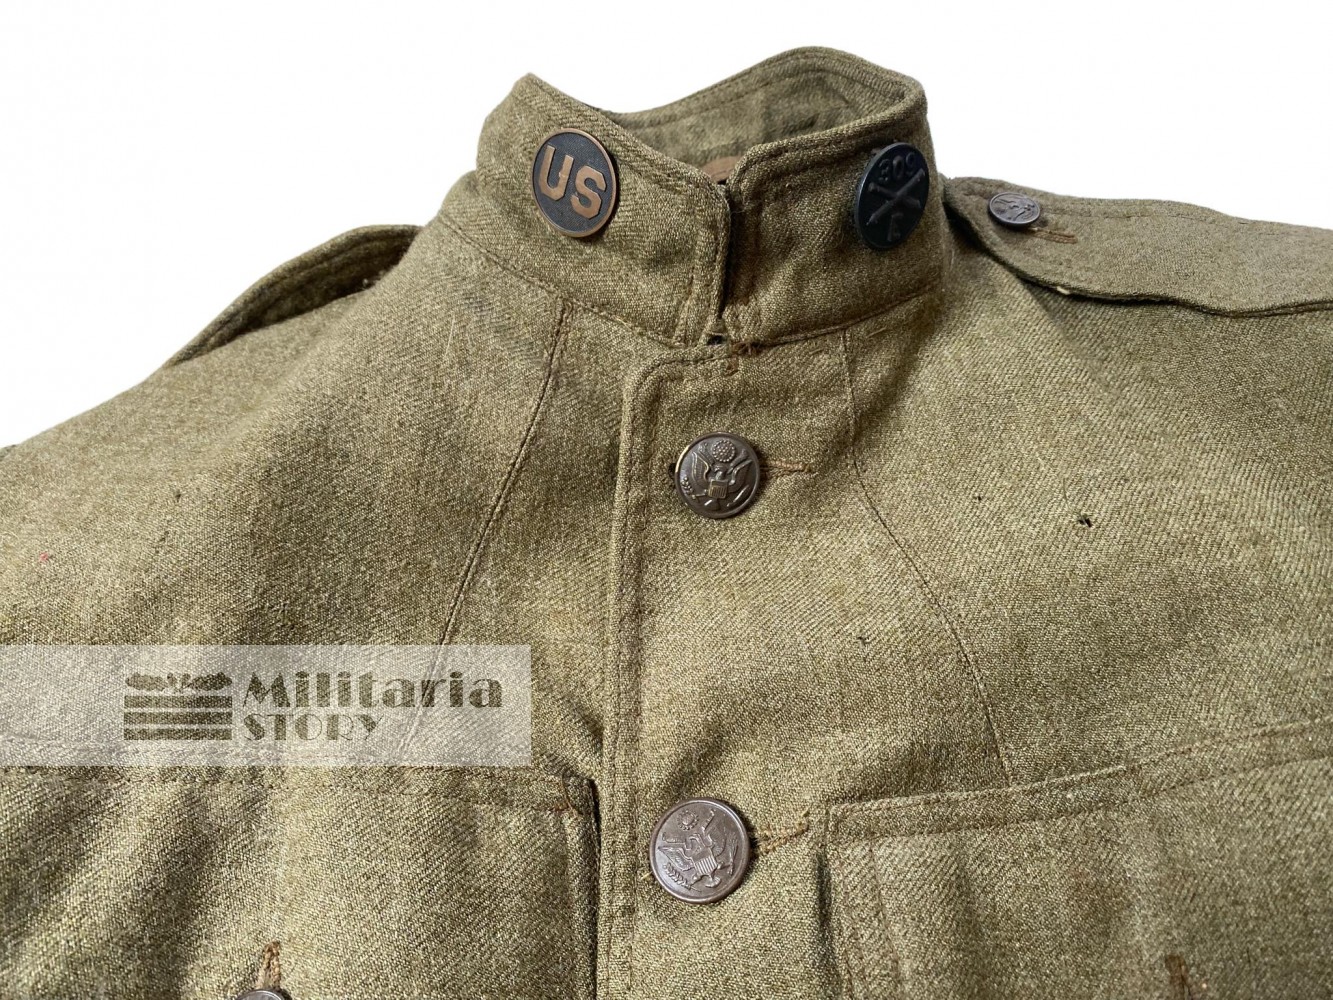 WWI U.S. 78TH division set named - WWI U.S. 78TH division set named: Allied Uniforms